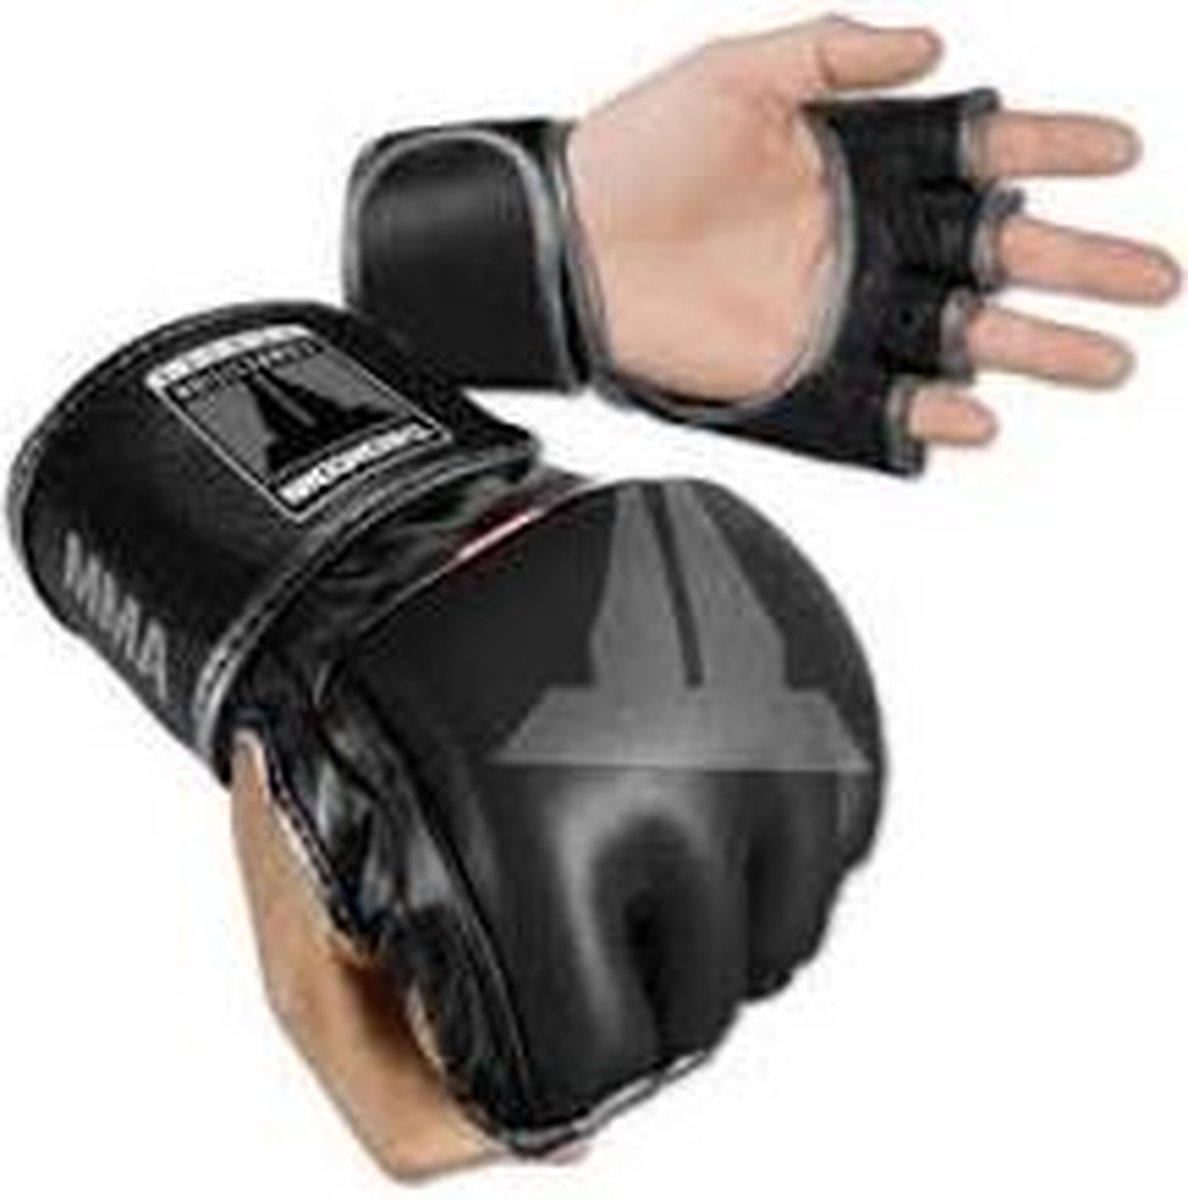 Throwdown - Throwdown Competition MMA Glove